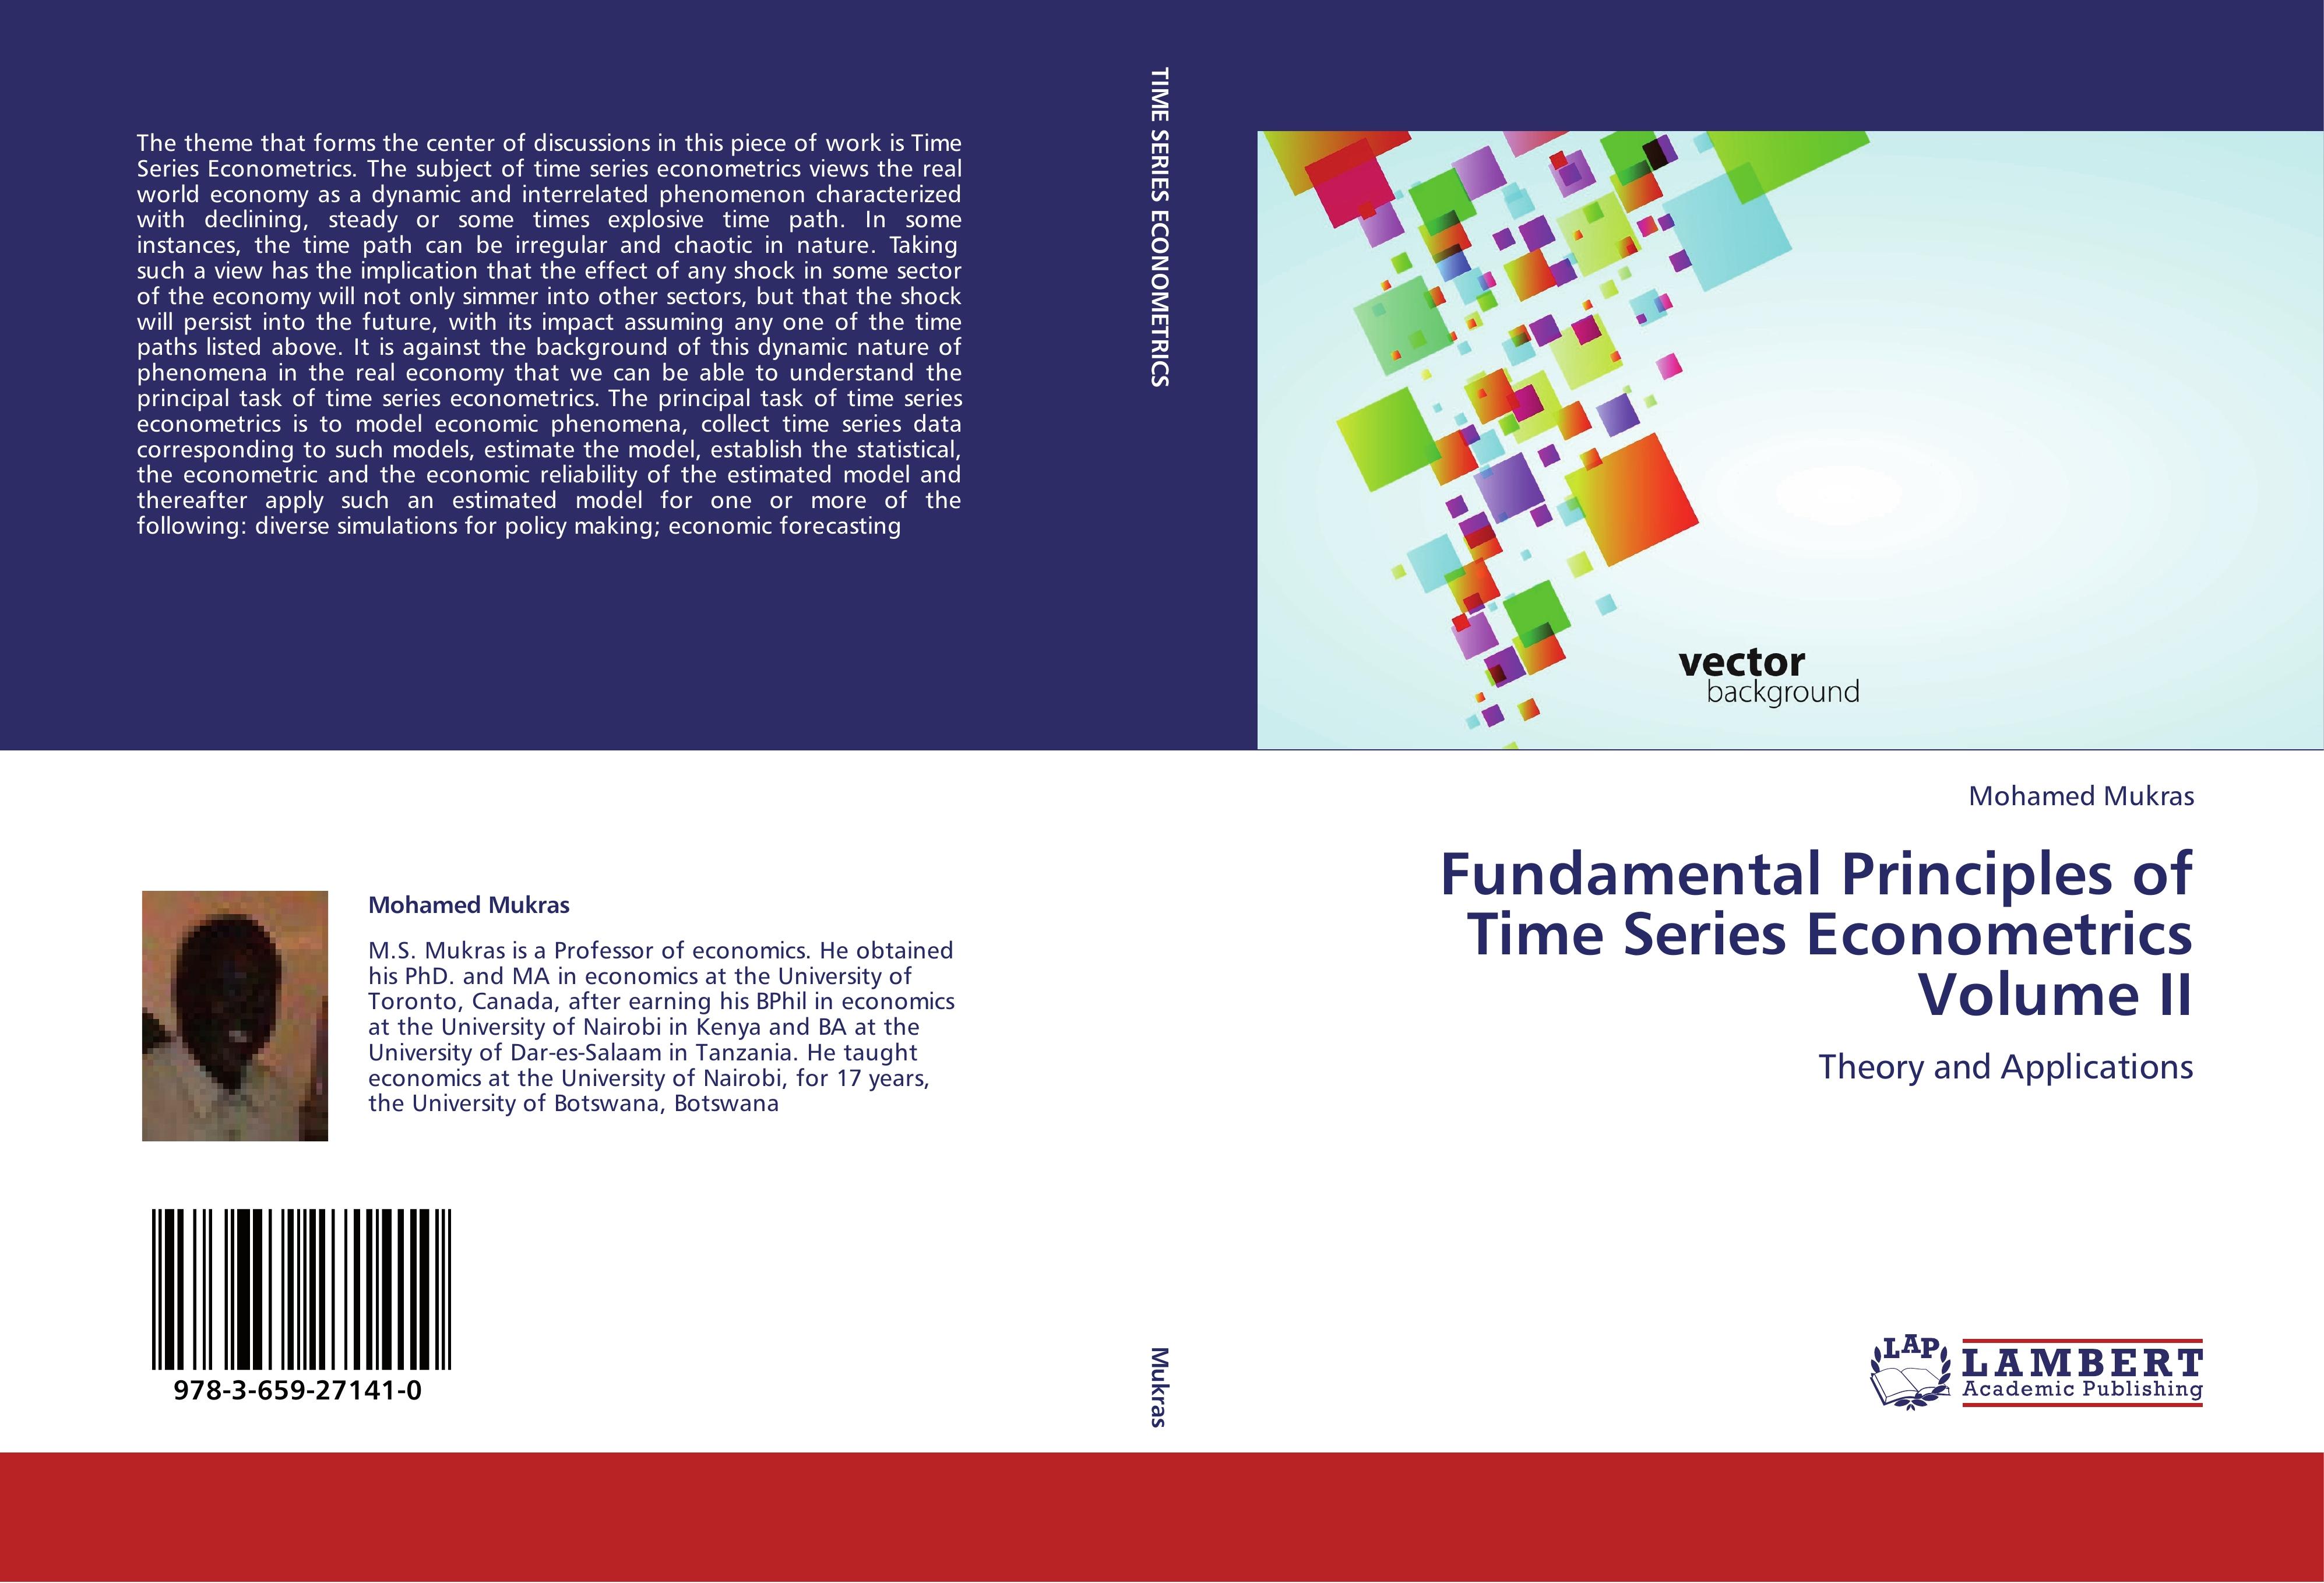 Fundamental Principles of Time Series Econometrics Volume II - Mohamed Mukras